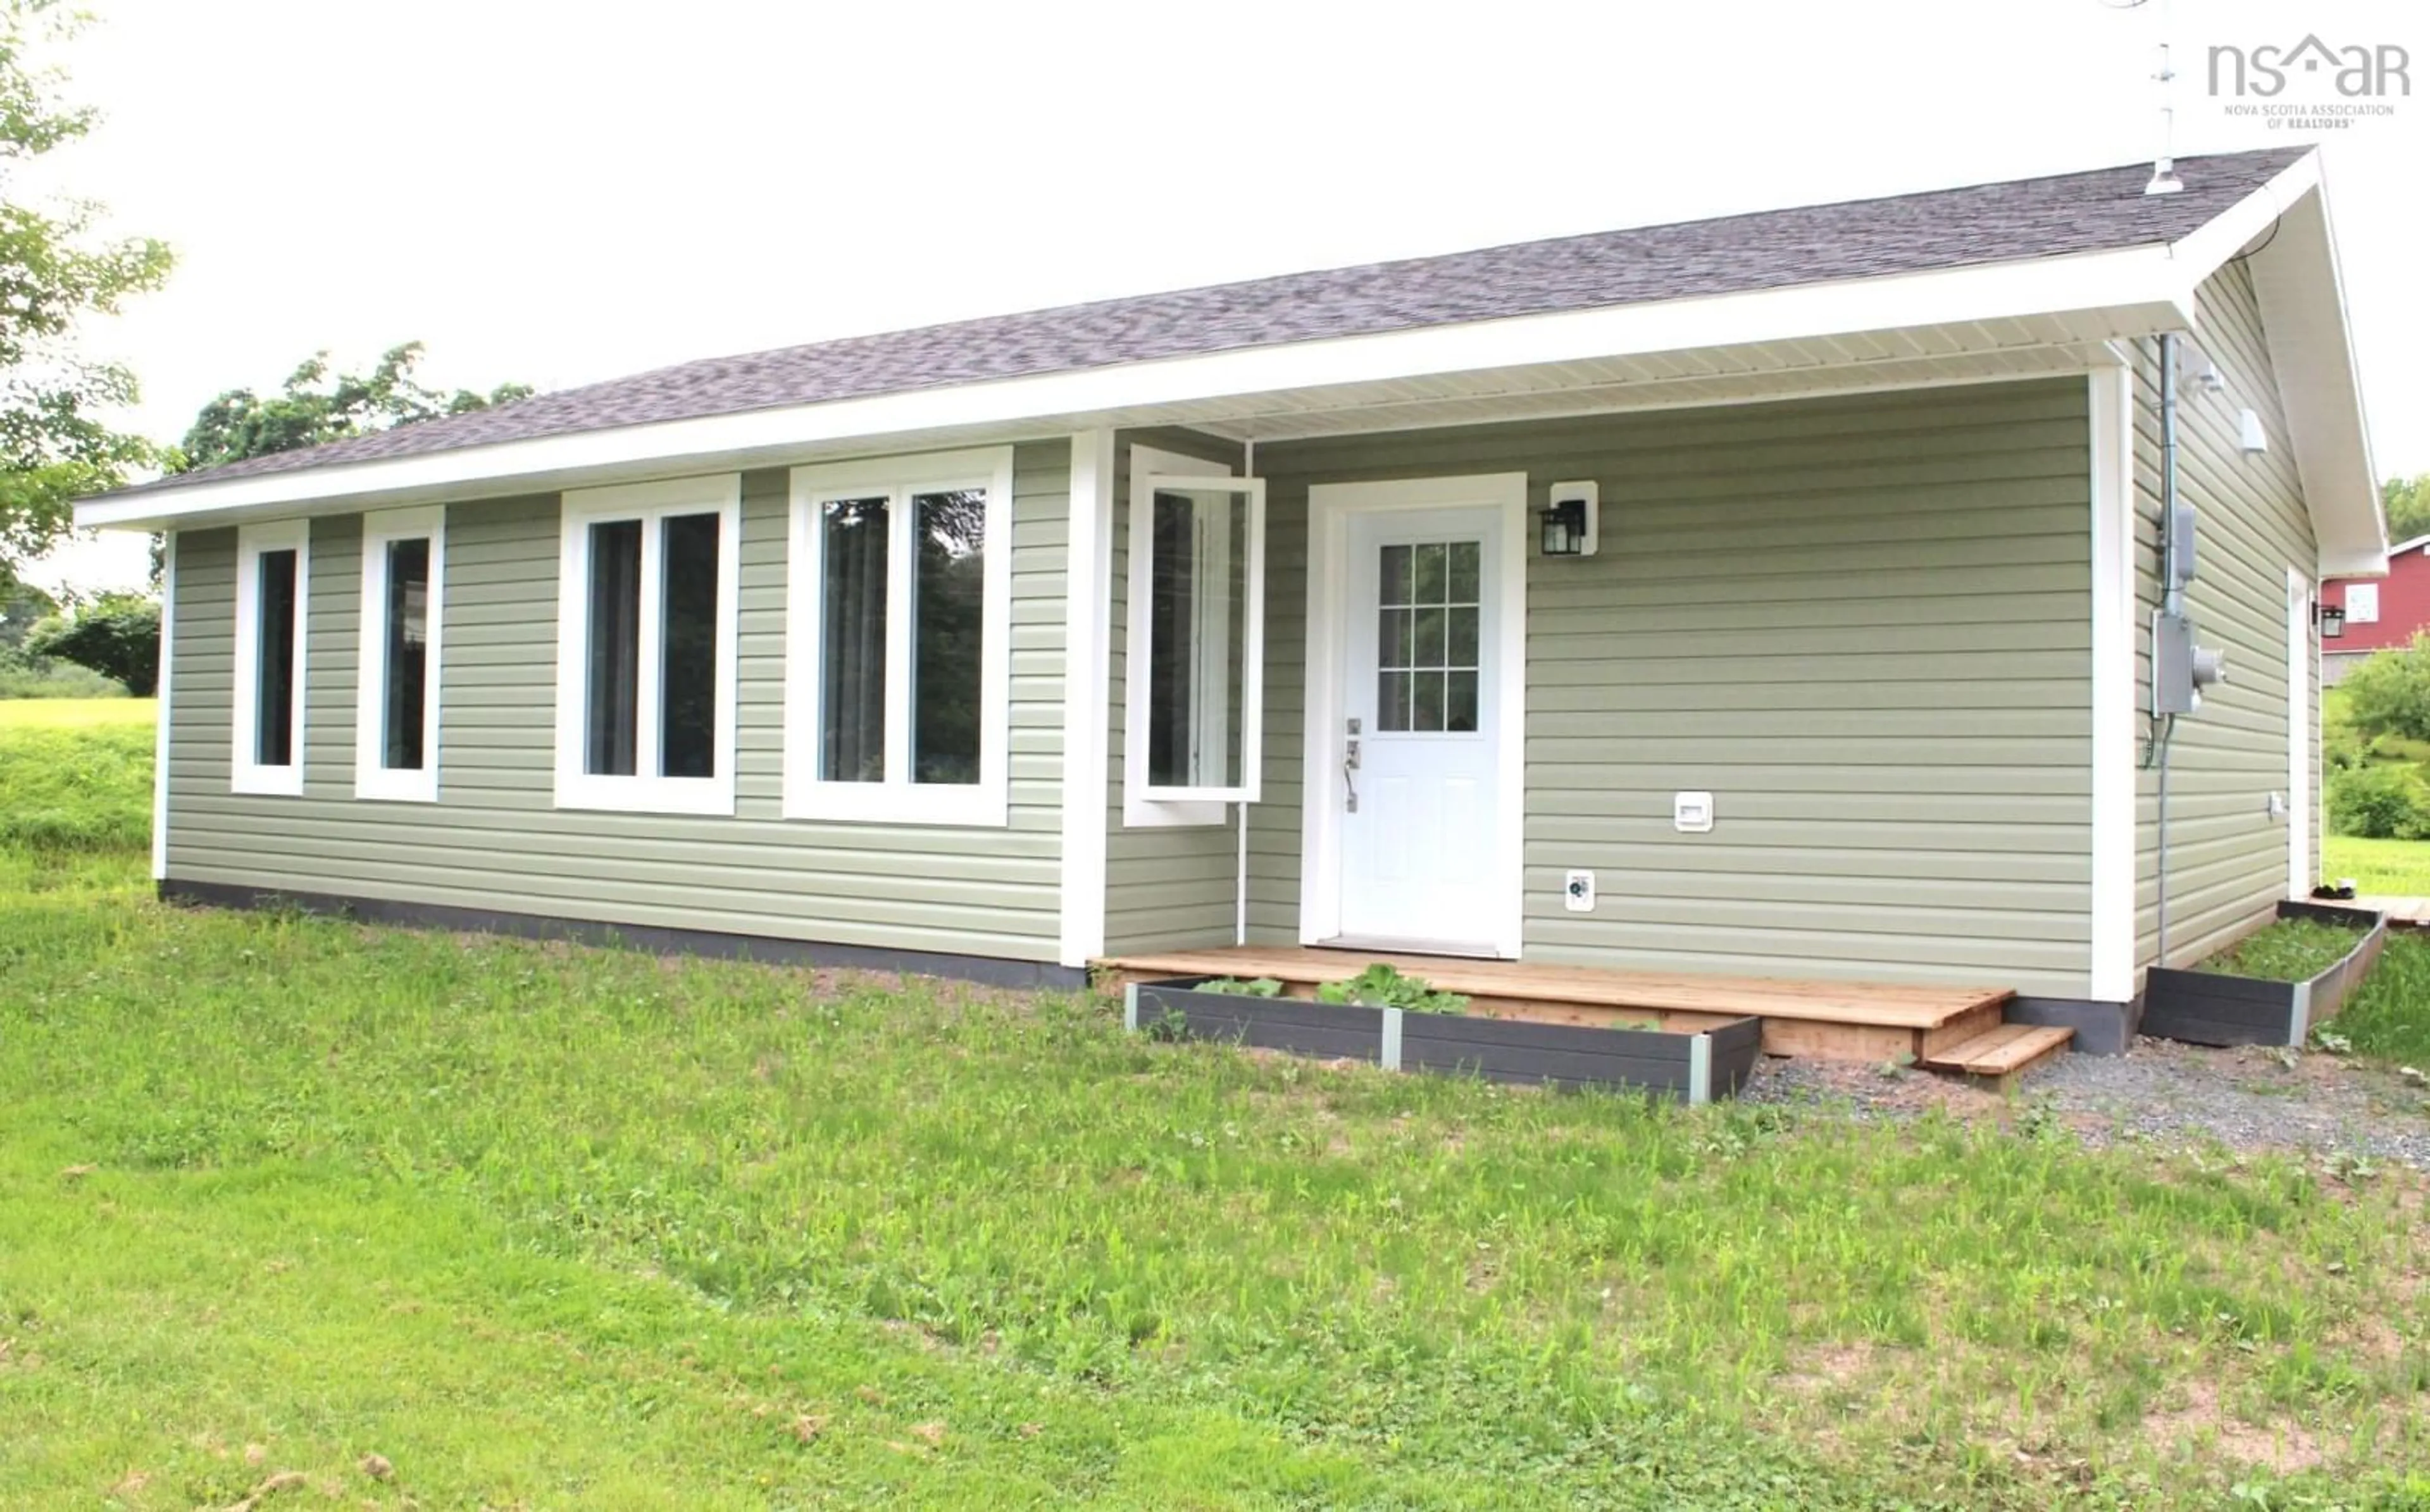 Home with vinyl exterior material for 6227 Highway 4, Linacy Nova Scotia B2H 5C4